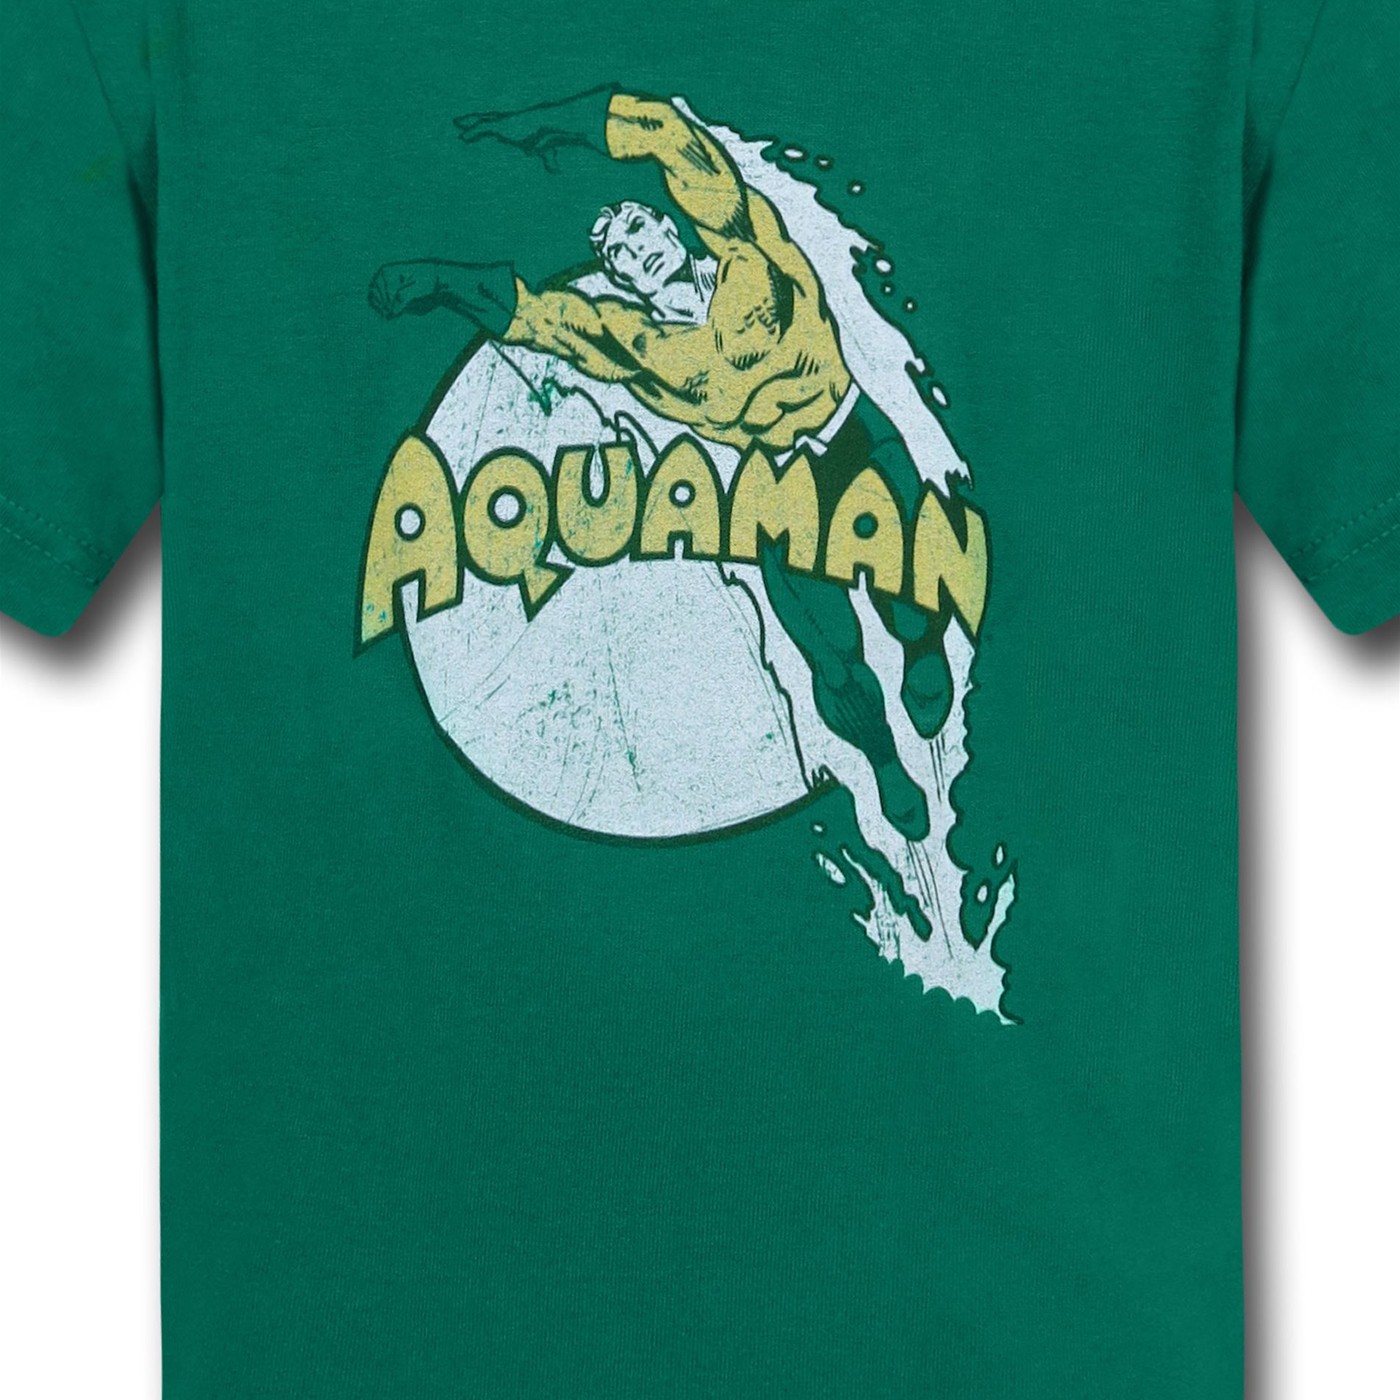 Aquaman Splash on Green Kids T-Shirt